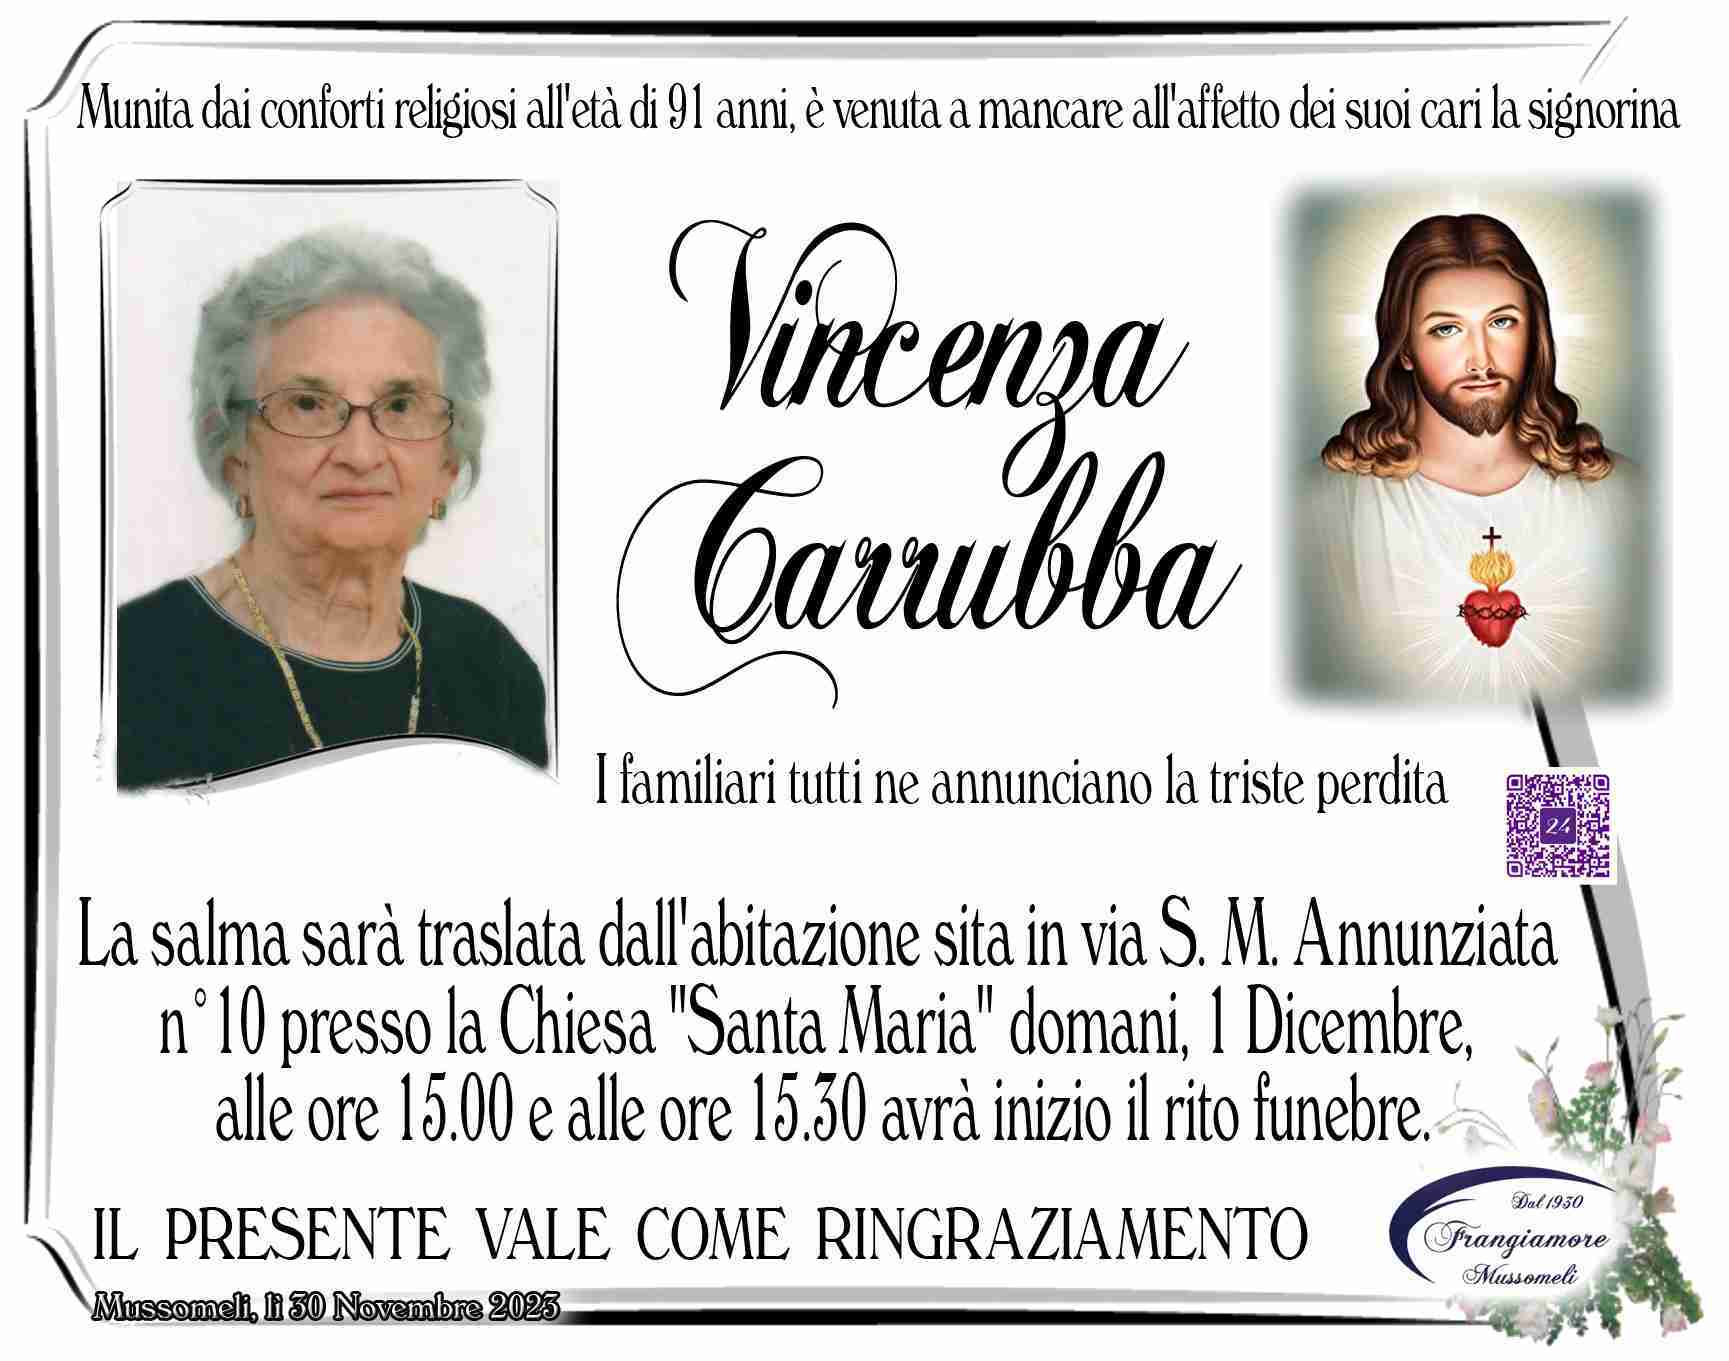 Vincenza Carrubba